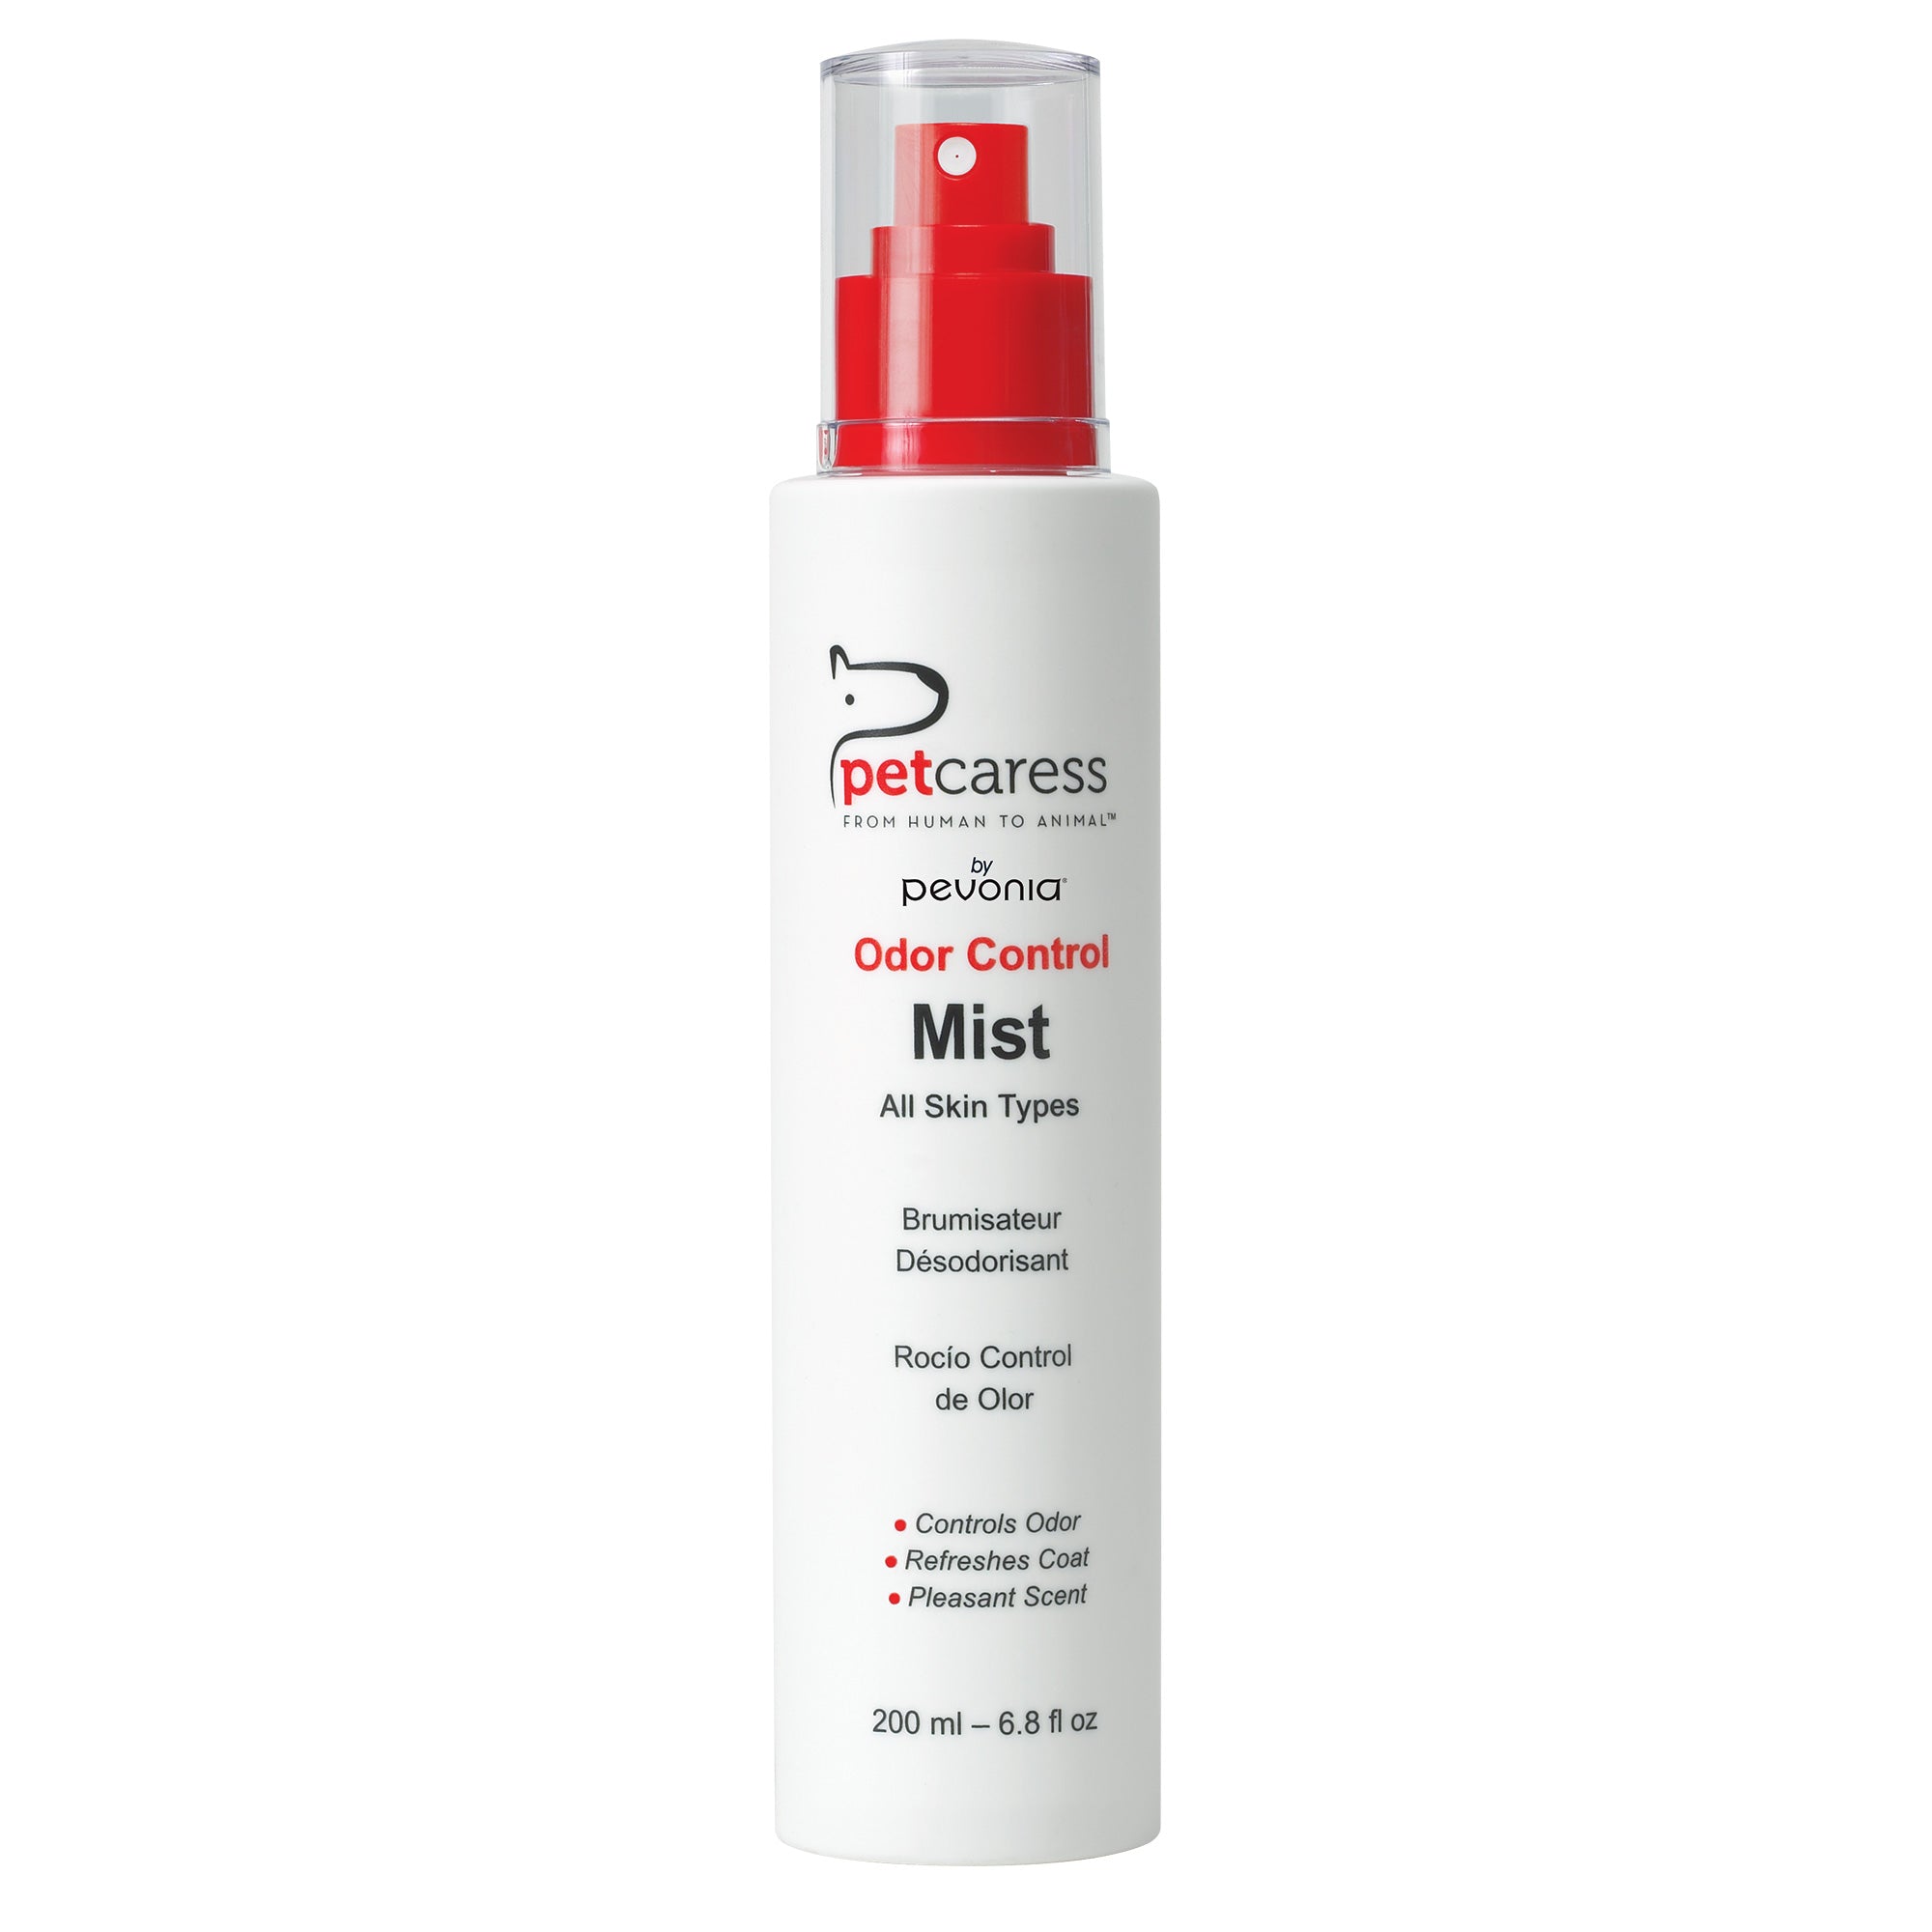 Odor Control Mist - All Skin Types